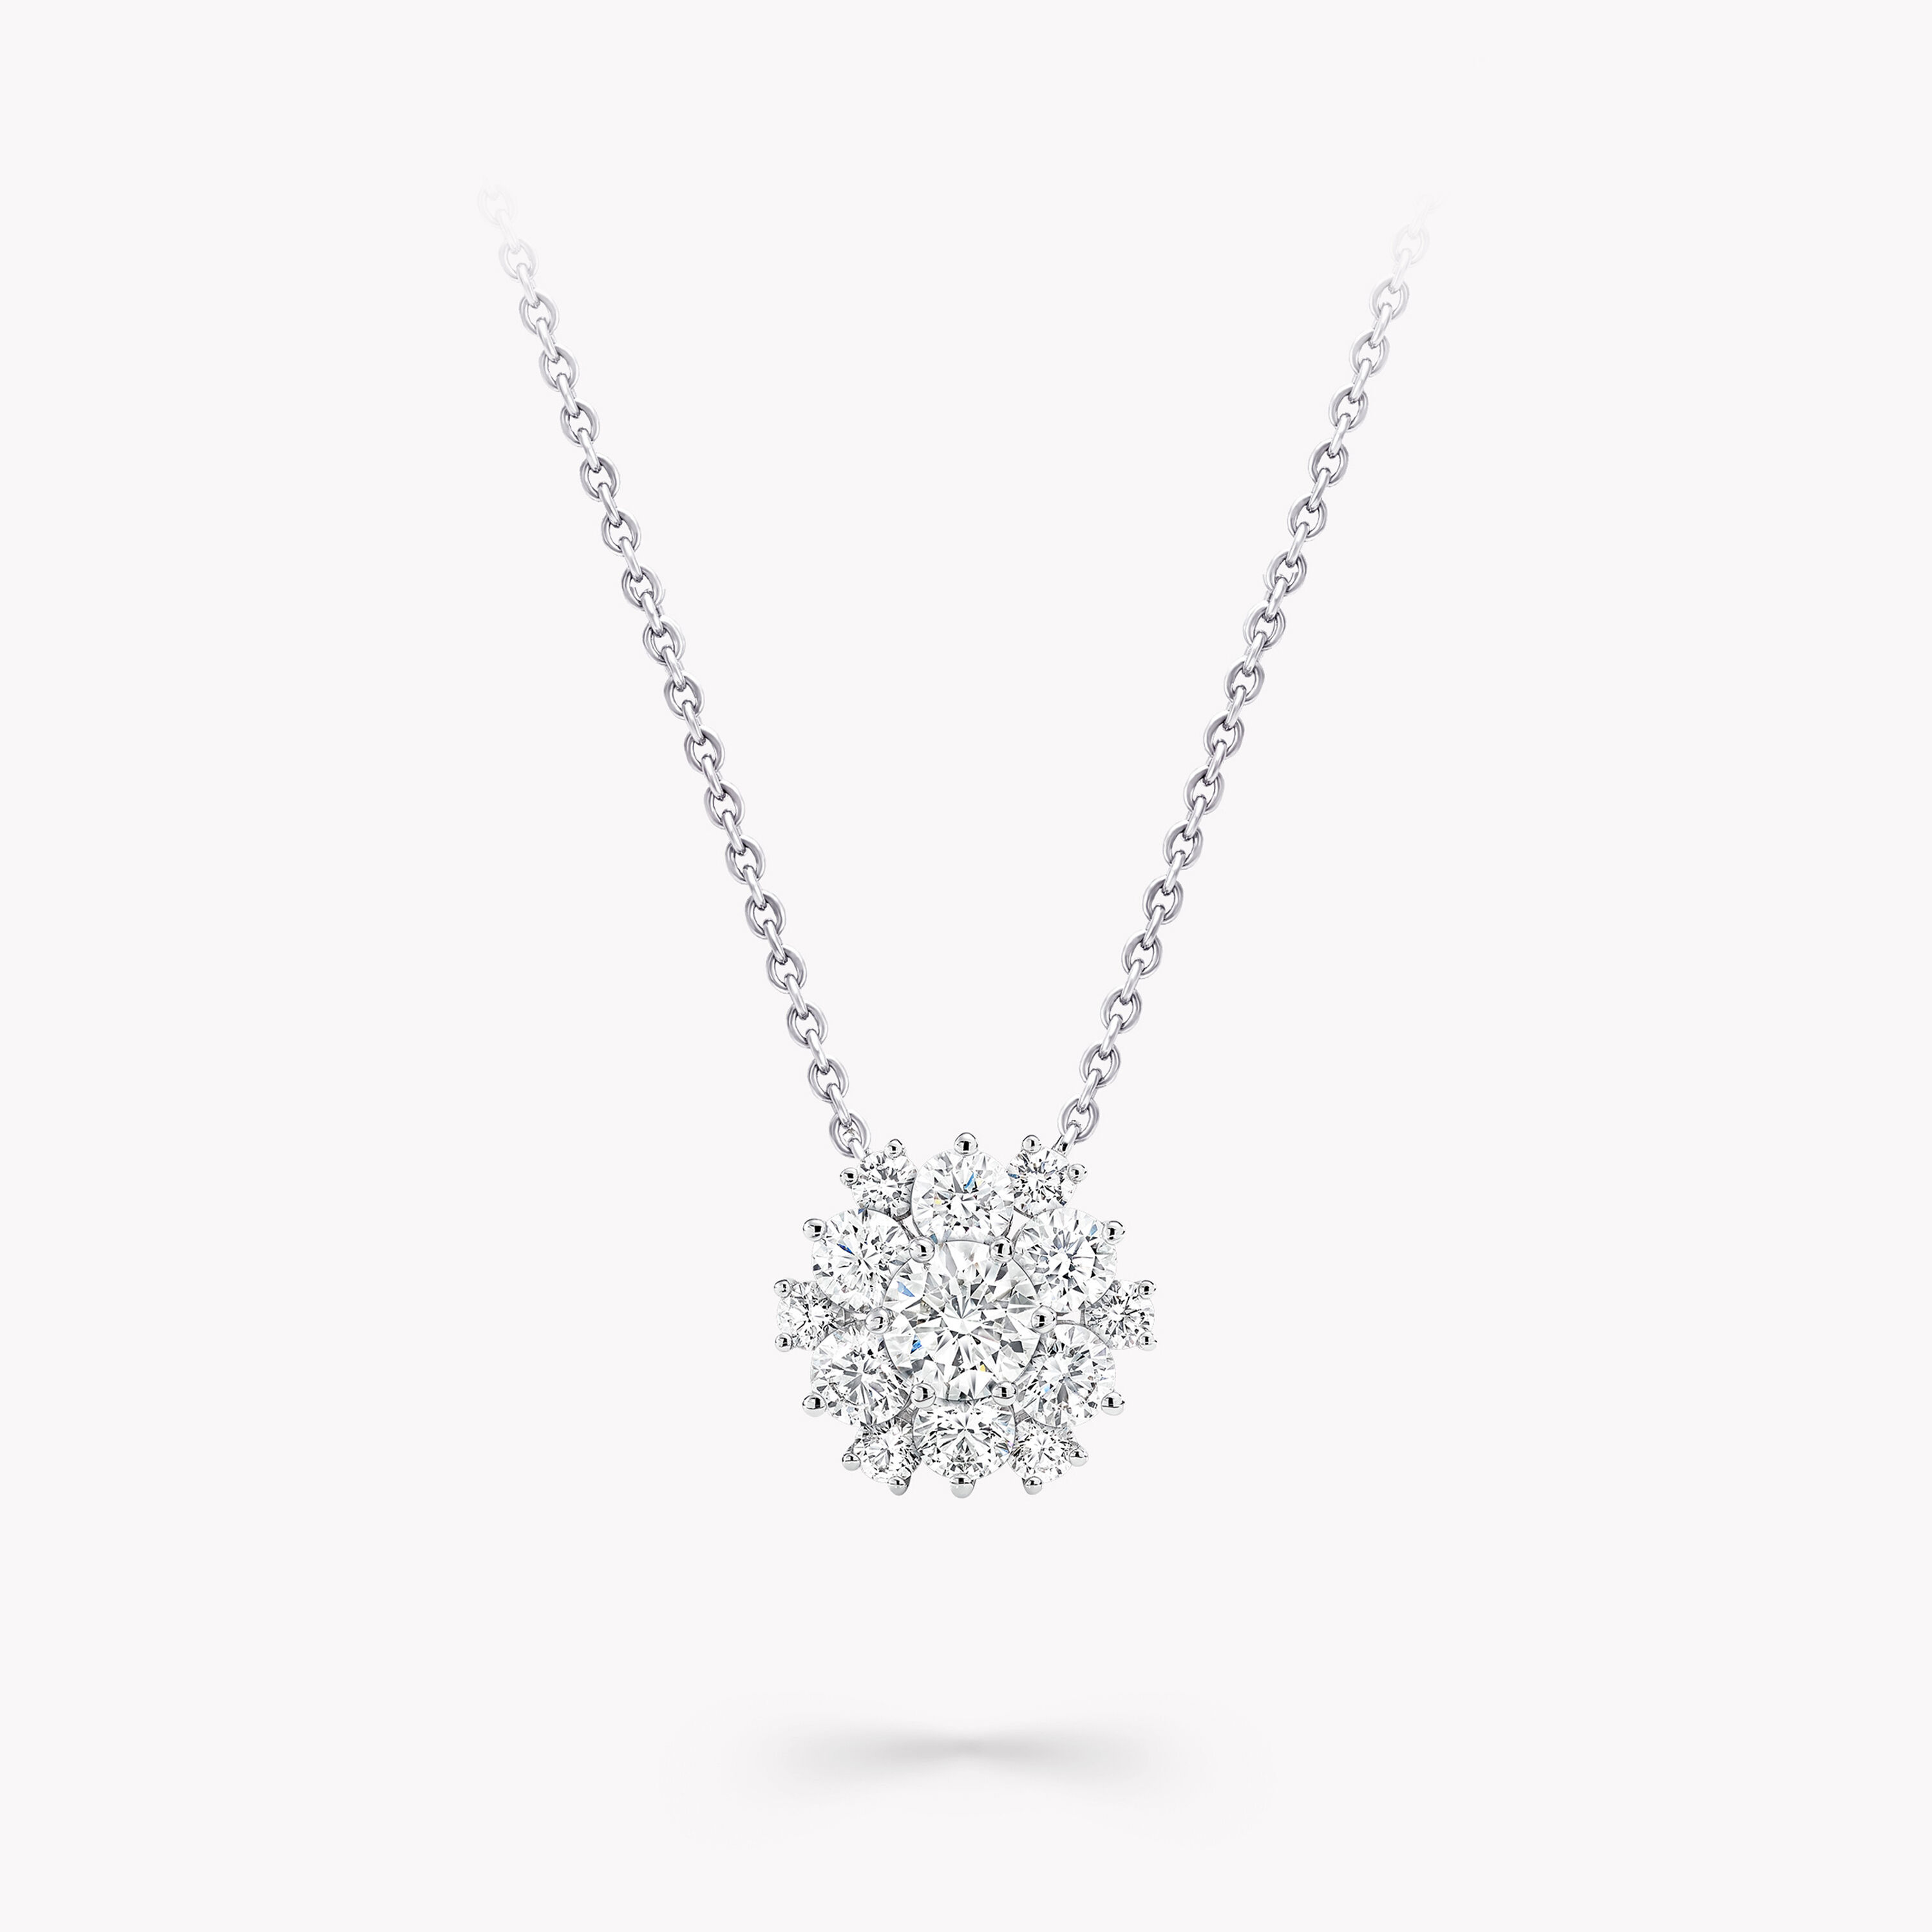 Dujour Diamond Cluster Necklace | Cluster necklace, Necklace, Jewelry